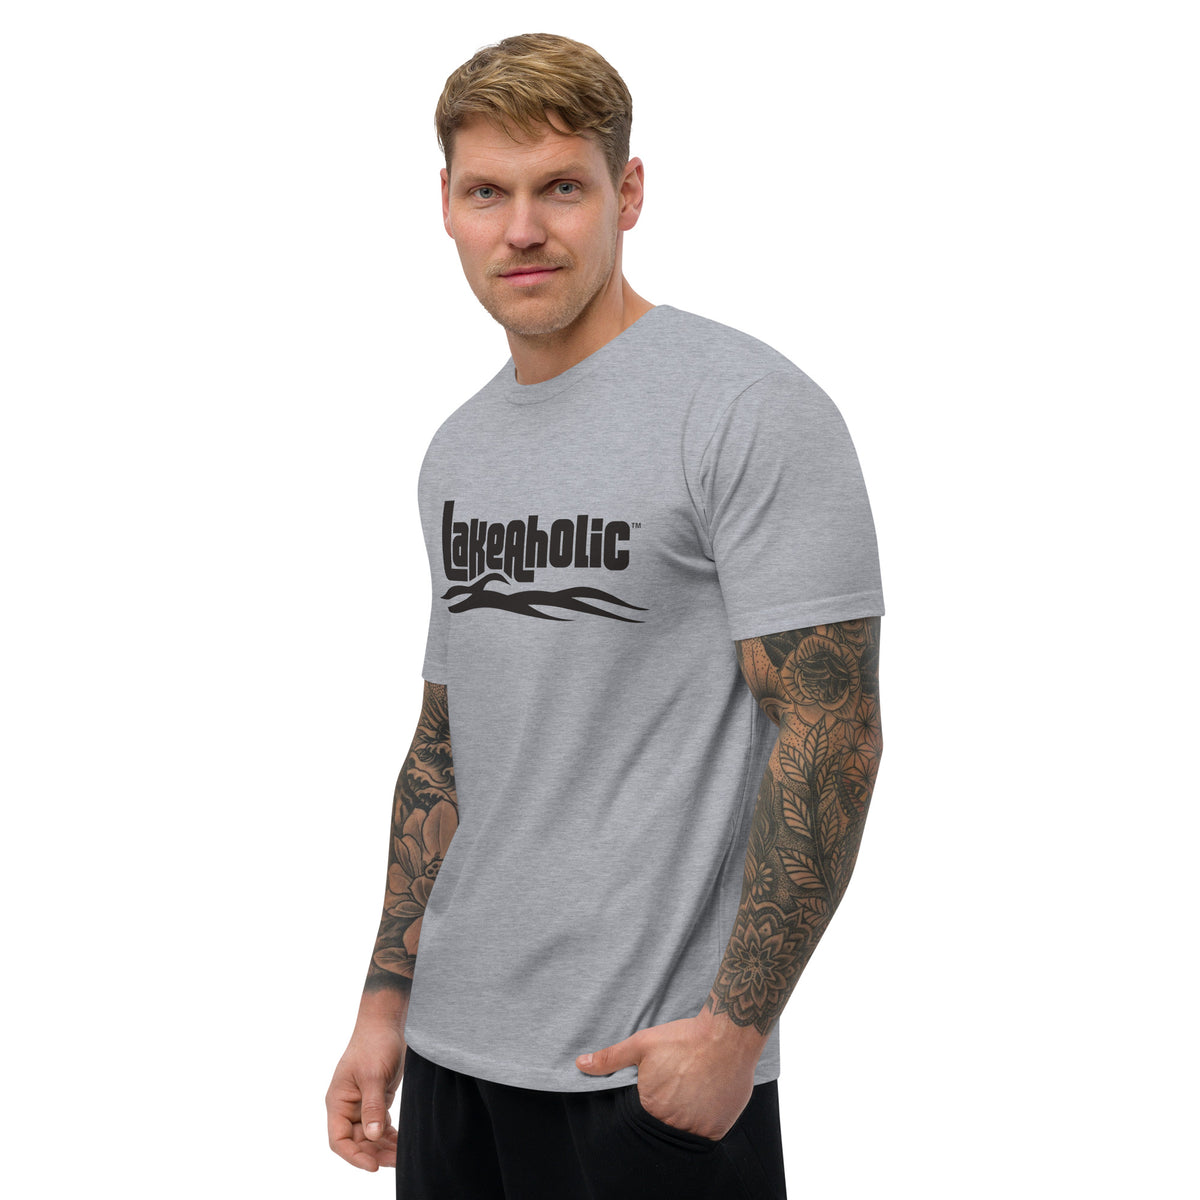 Lakeaholic Men's Short Sleeve T-shirt